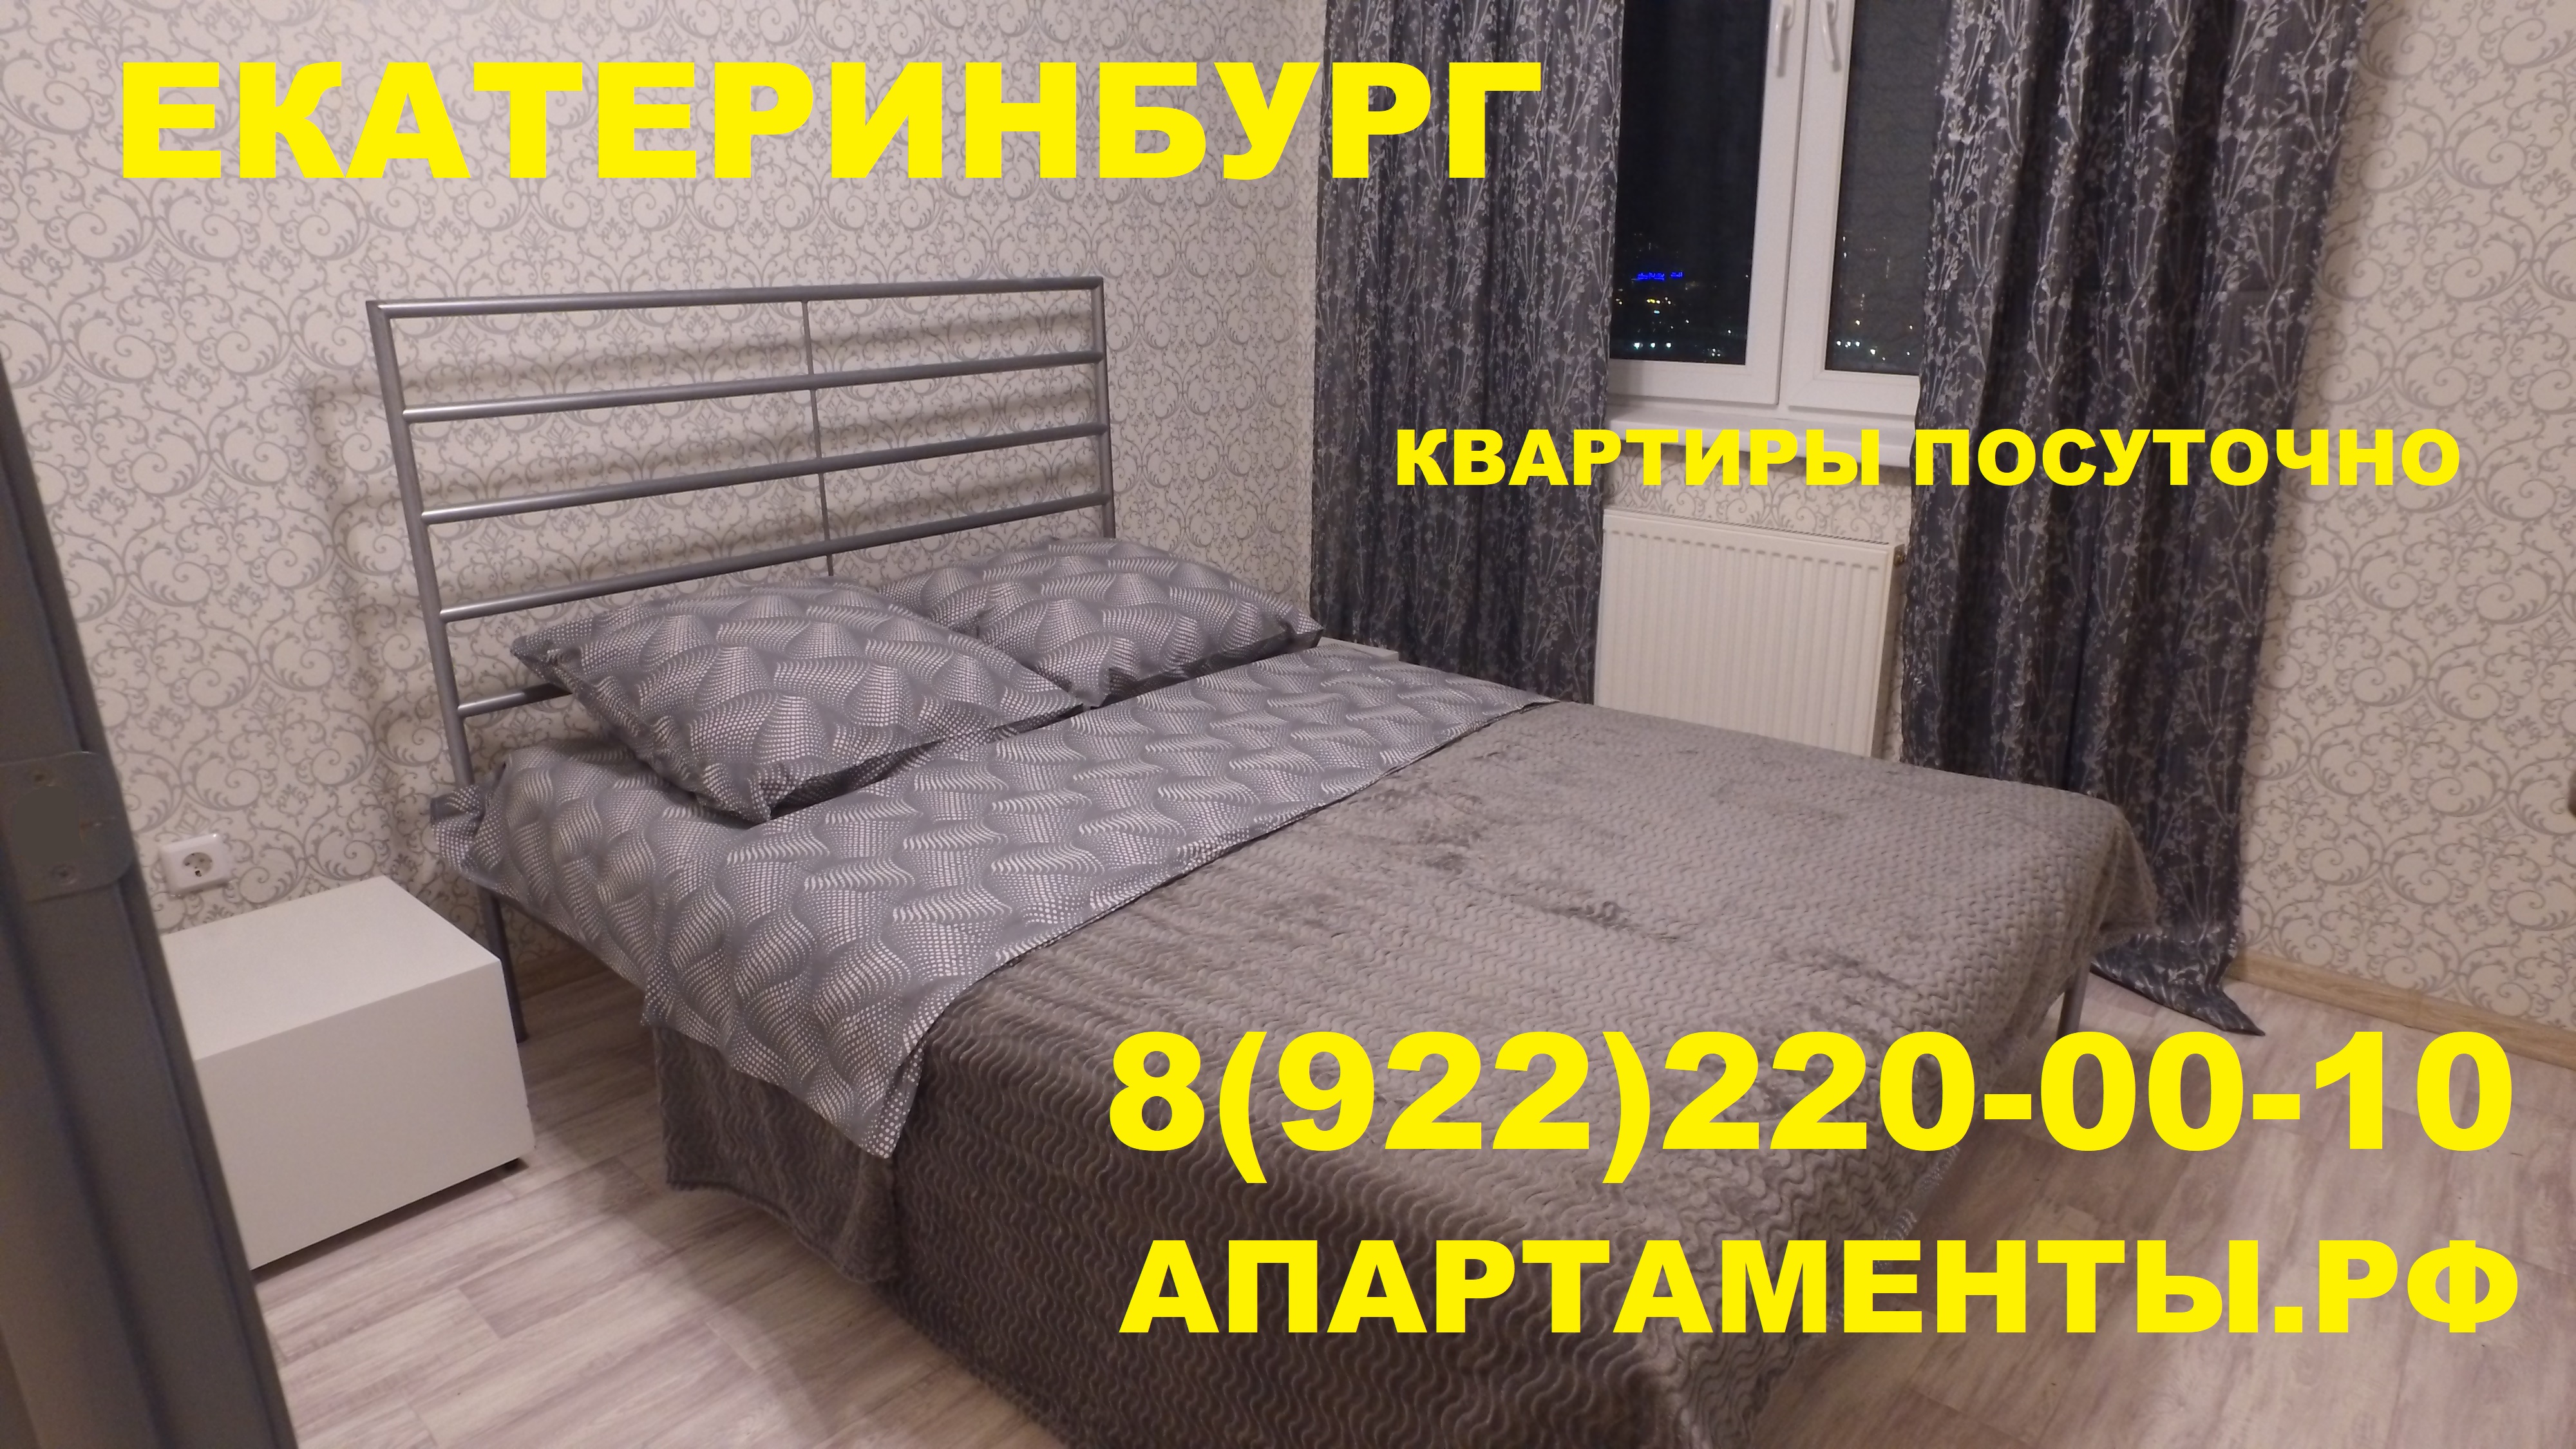 Квартиры посуточно Екатеринбург 8(922)220-00-10 #екатеринбург #квартиры #посуточно